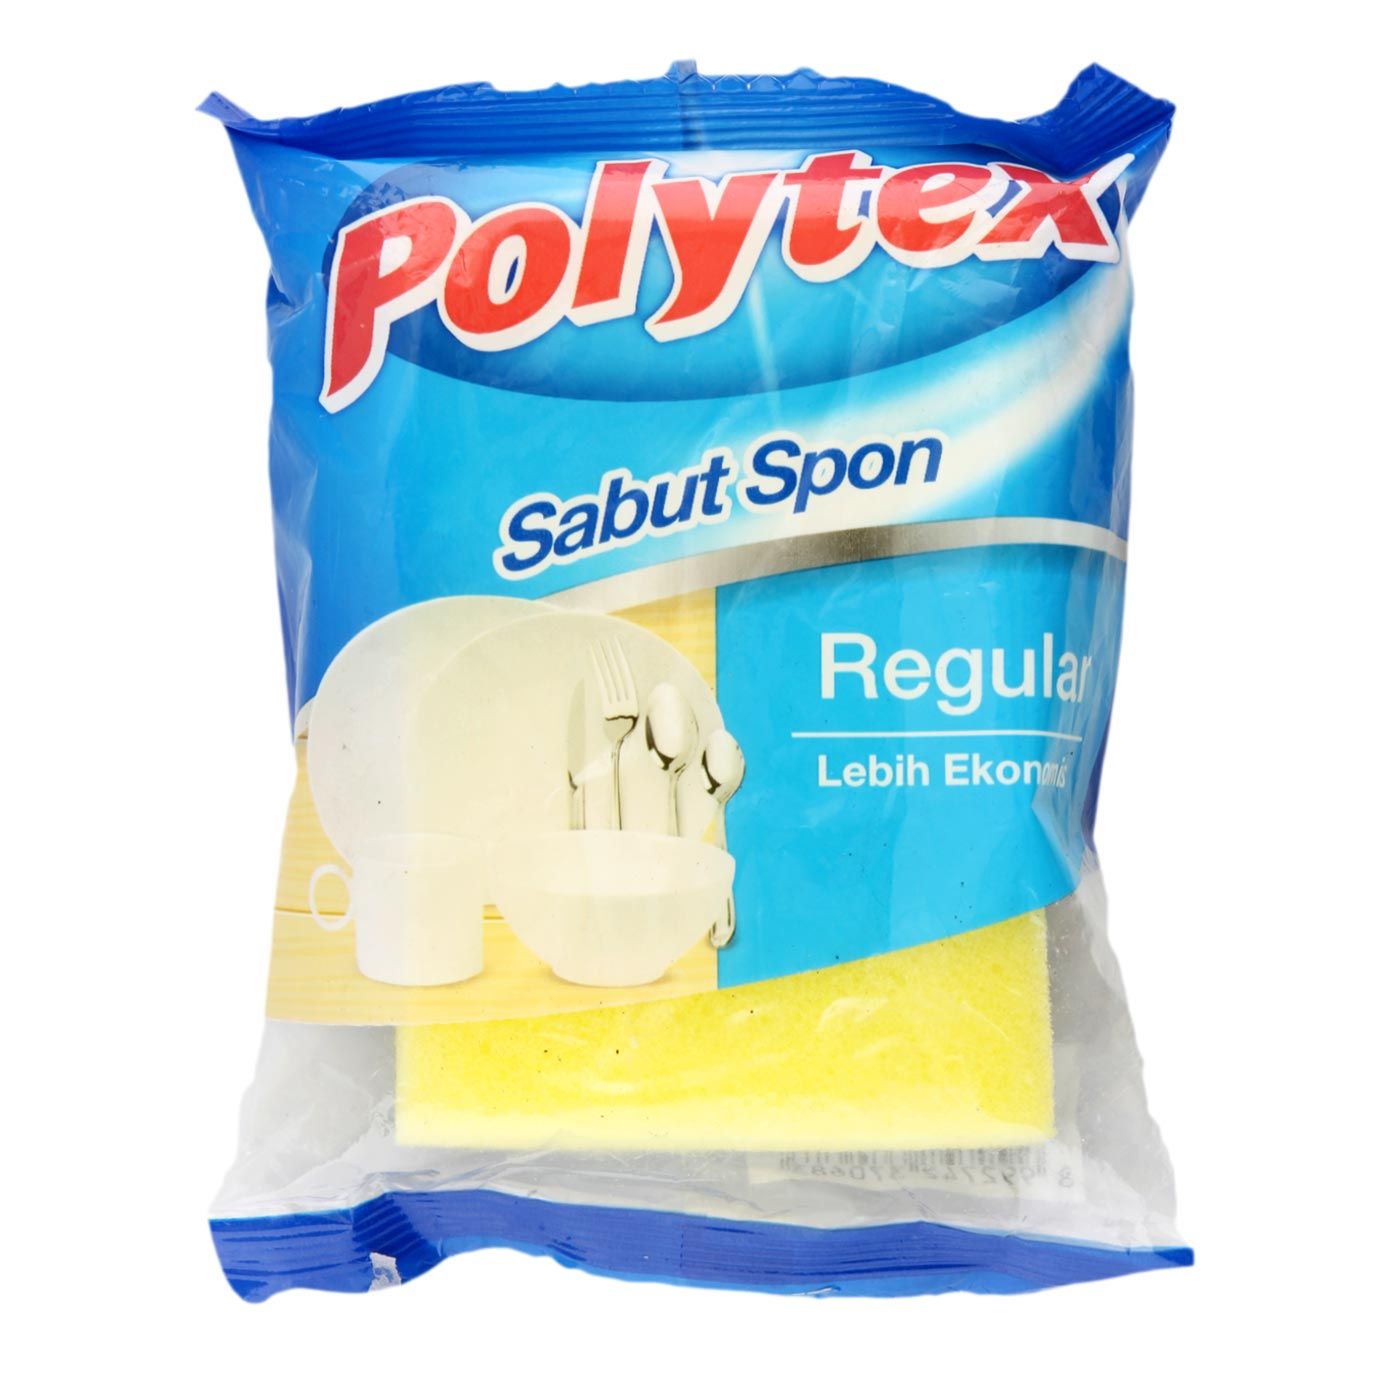 Polytex Sabut Spon Regular - 1